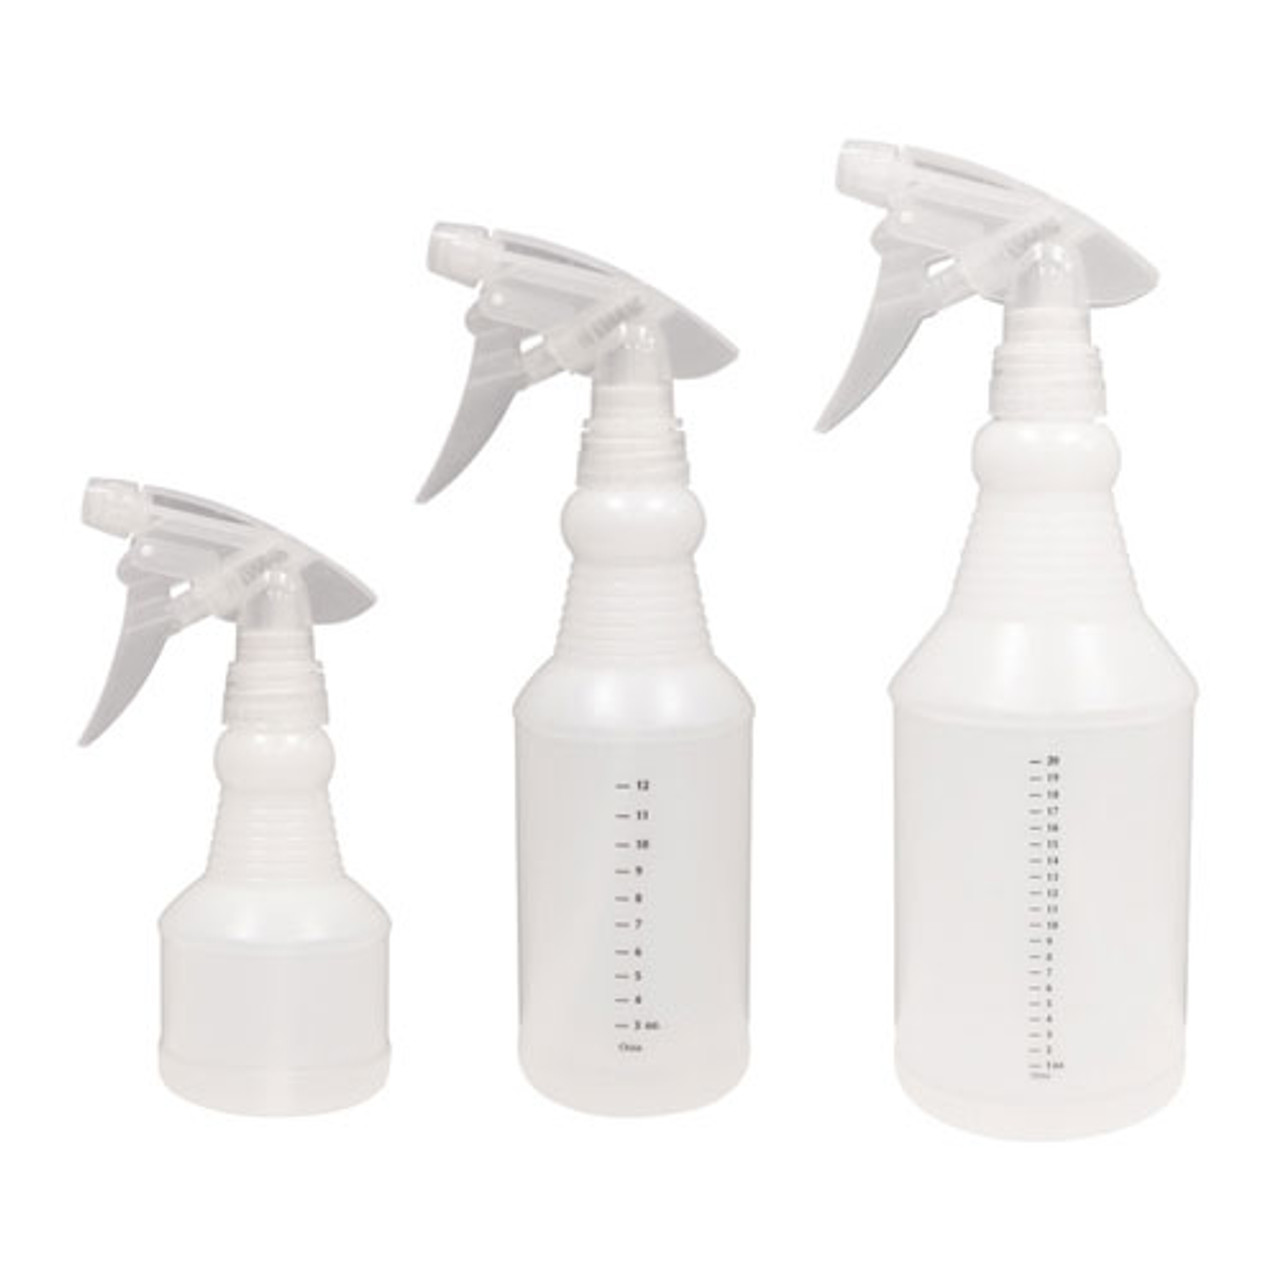 Plastic Spray Bottle with Nozzle - White Opaque 32 oz